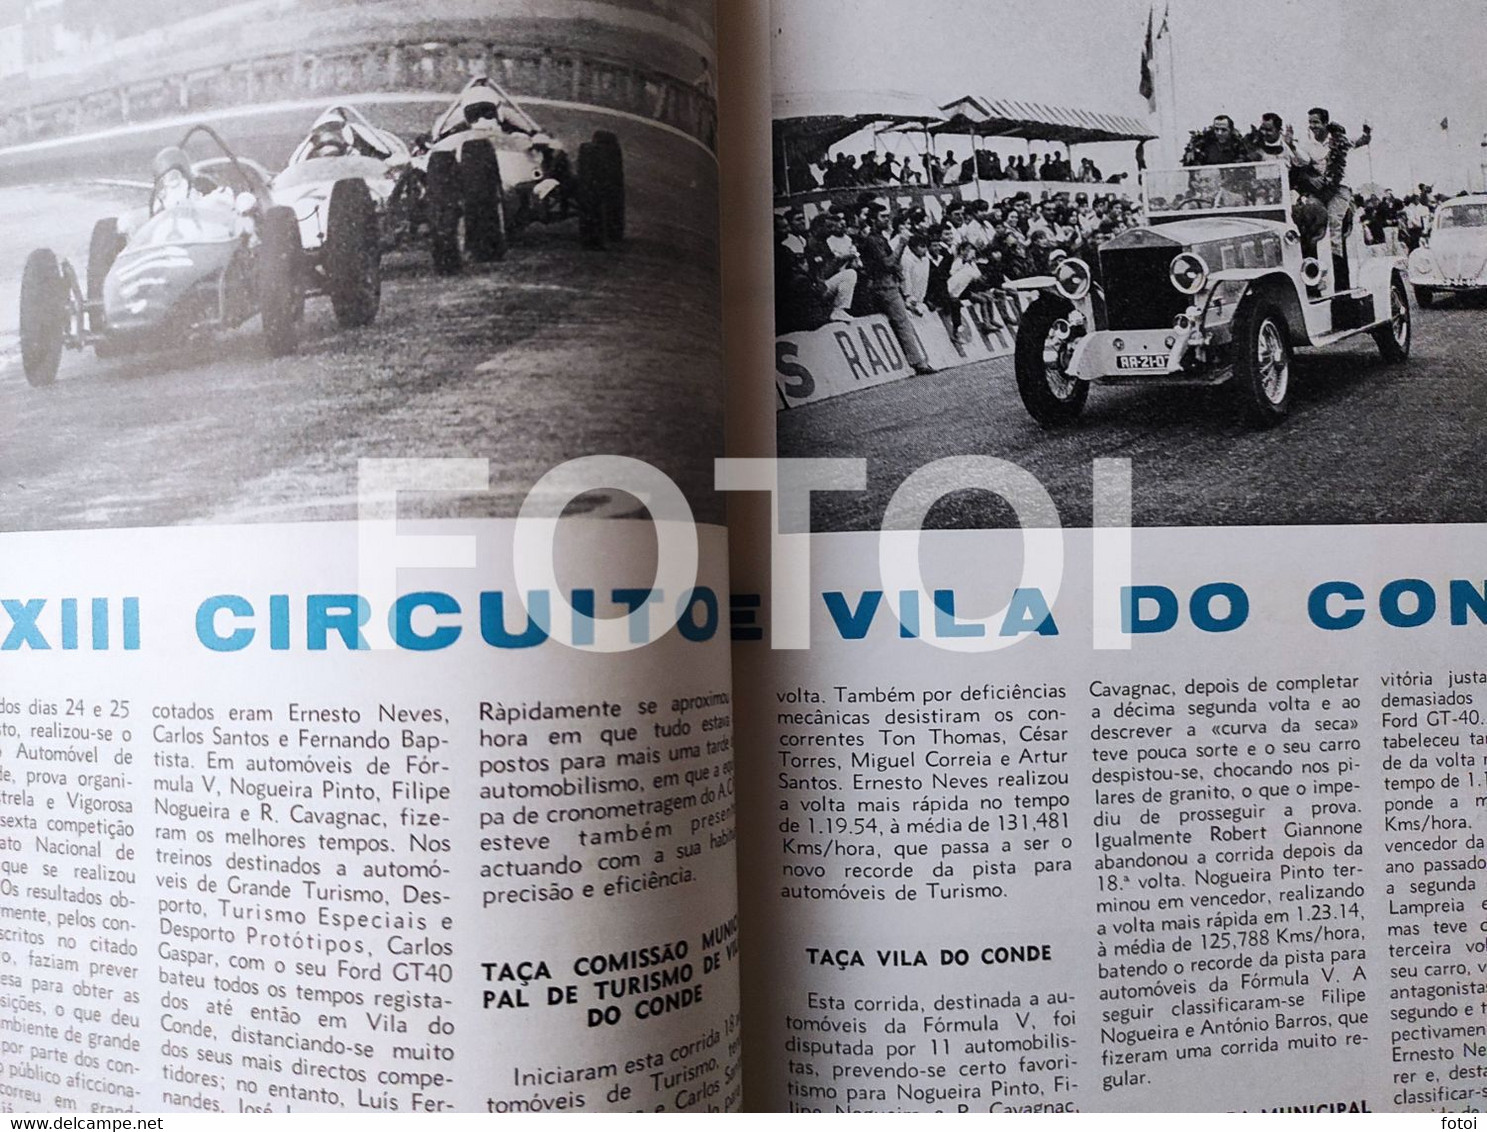 1968 CIRCUITO VILA CONDE RALLYE TAP RALI 24 HEURES LE MANS NSU CALDAS DA RAINHA REVISTA  ACP AUTOMOVEL CLUB PORTUGAL